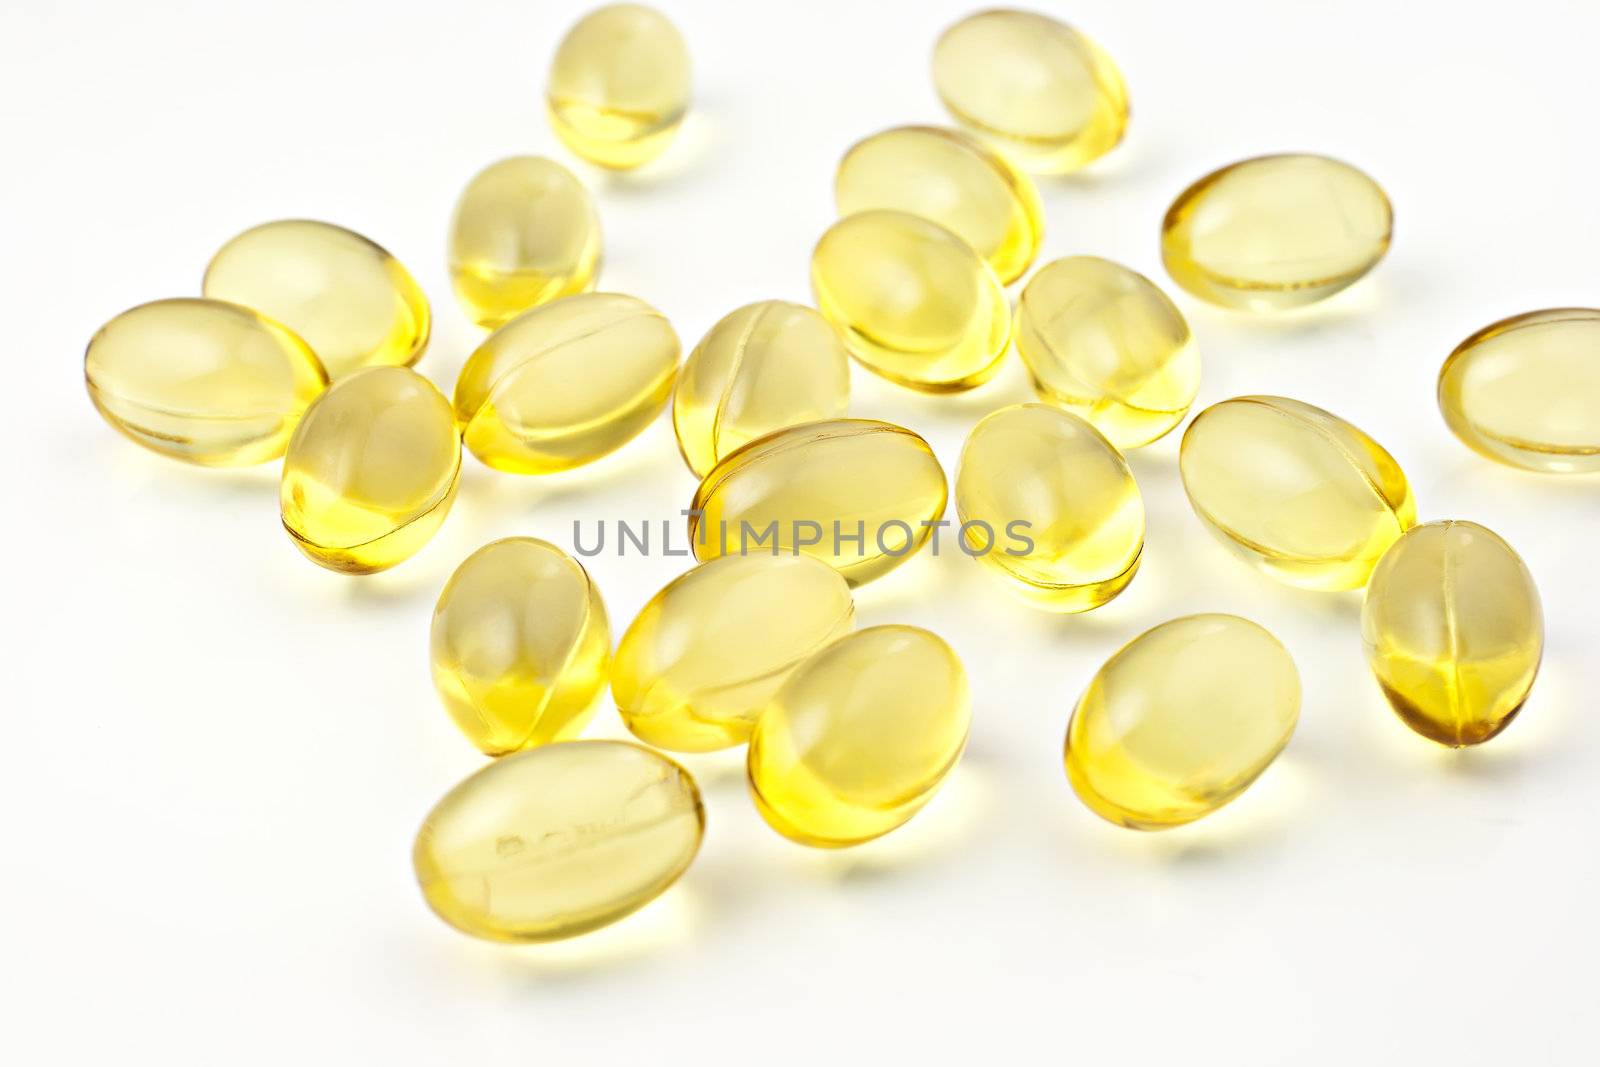 Gel vitamin supplement capsules. by gitusik